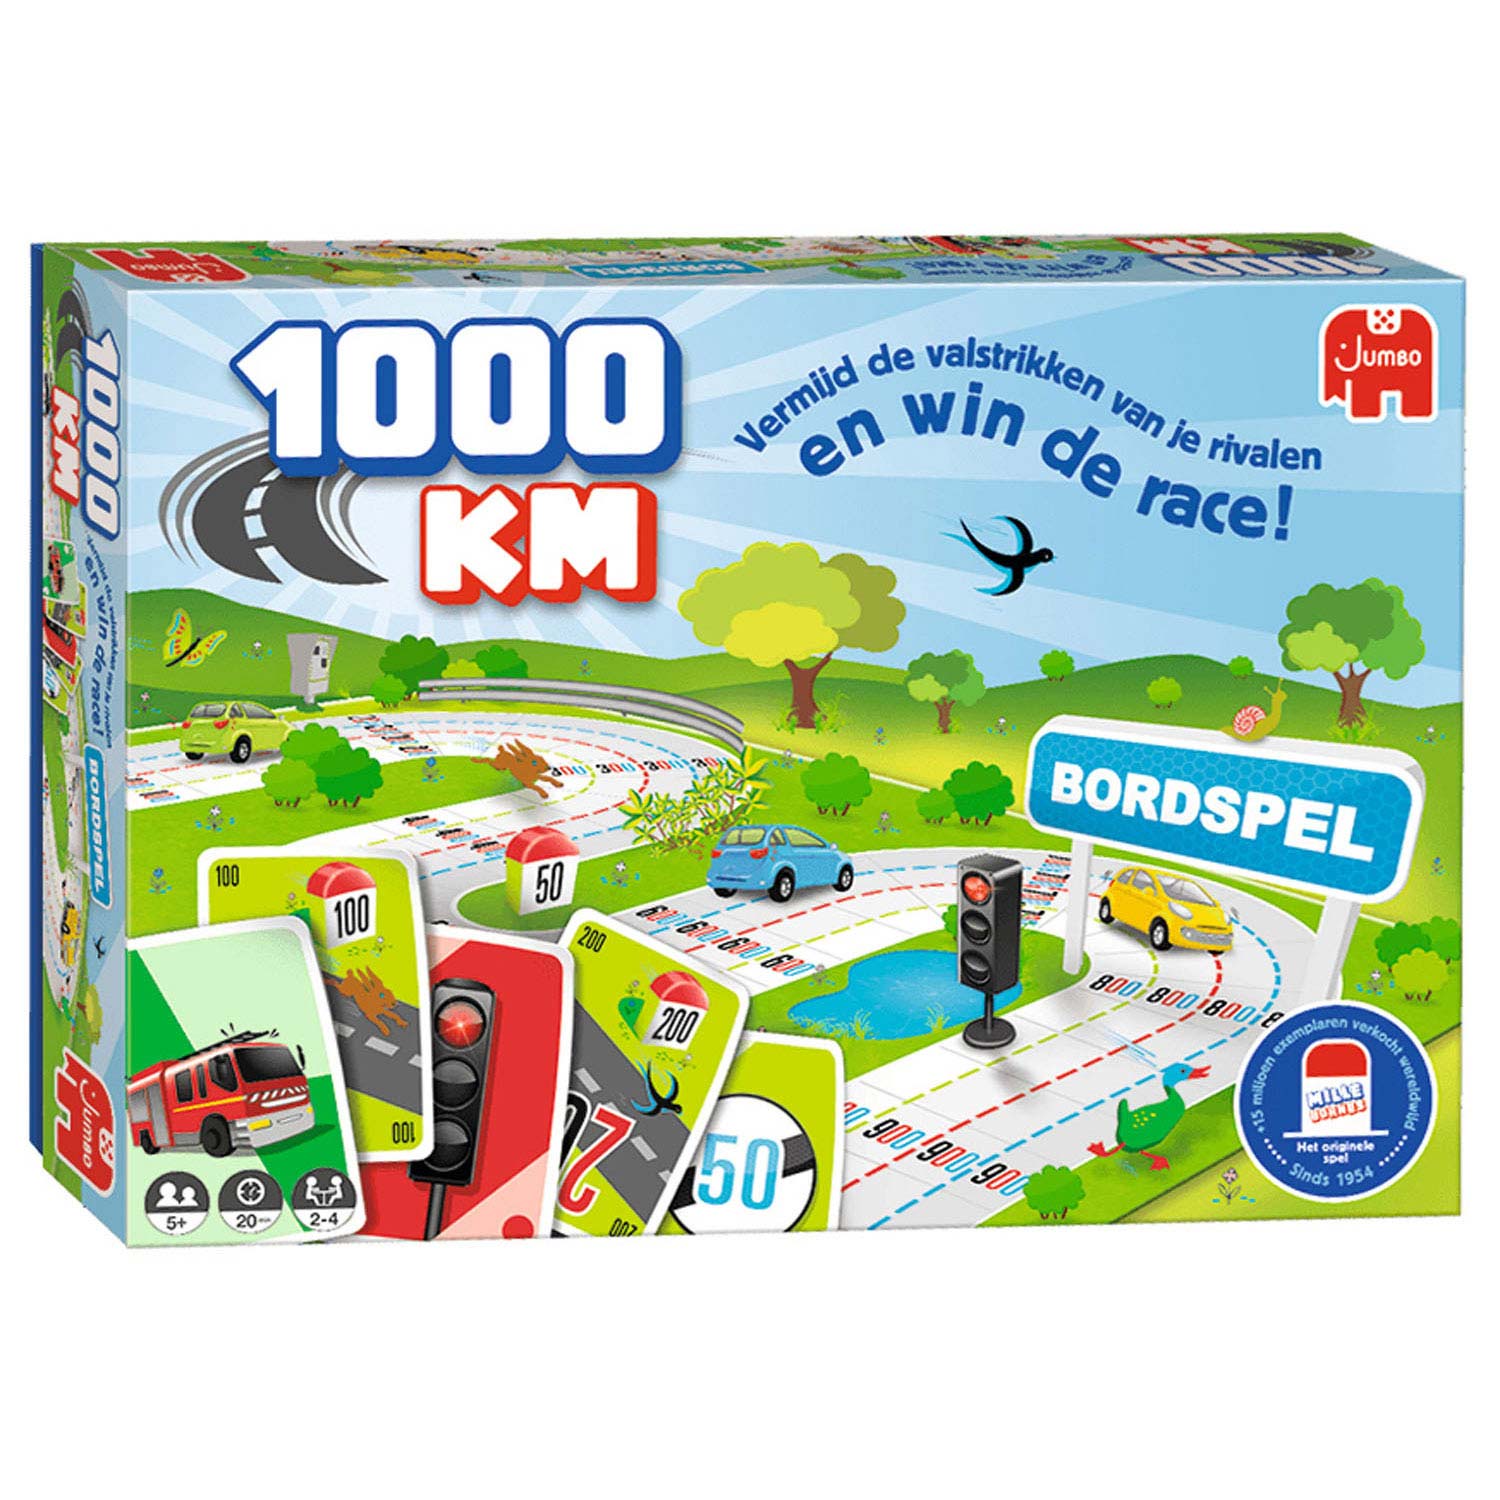 Jumbo 1000KM Bordspel online | Lobbes Speelgoed